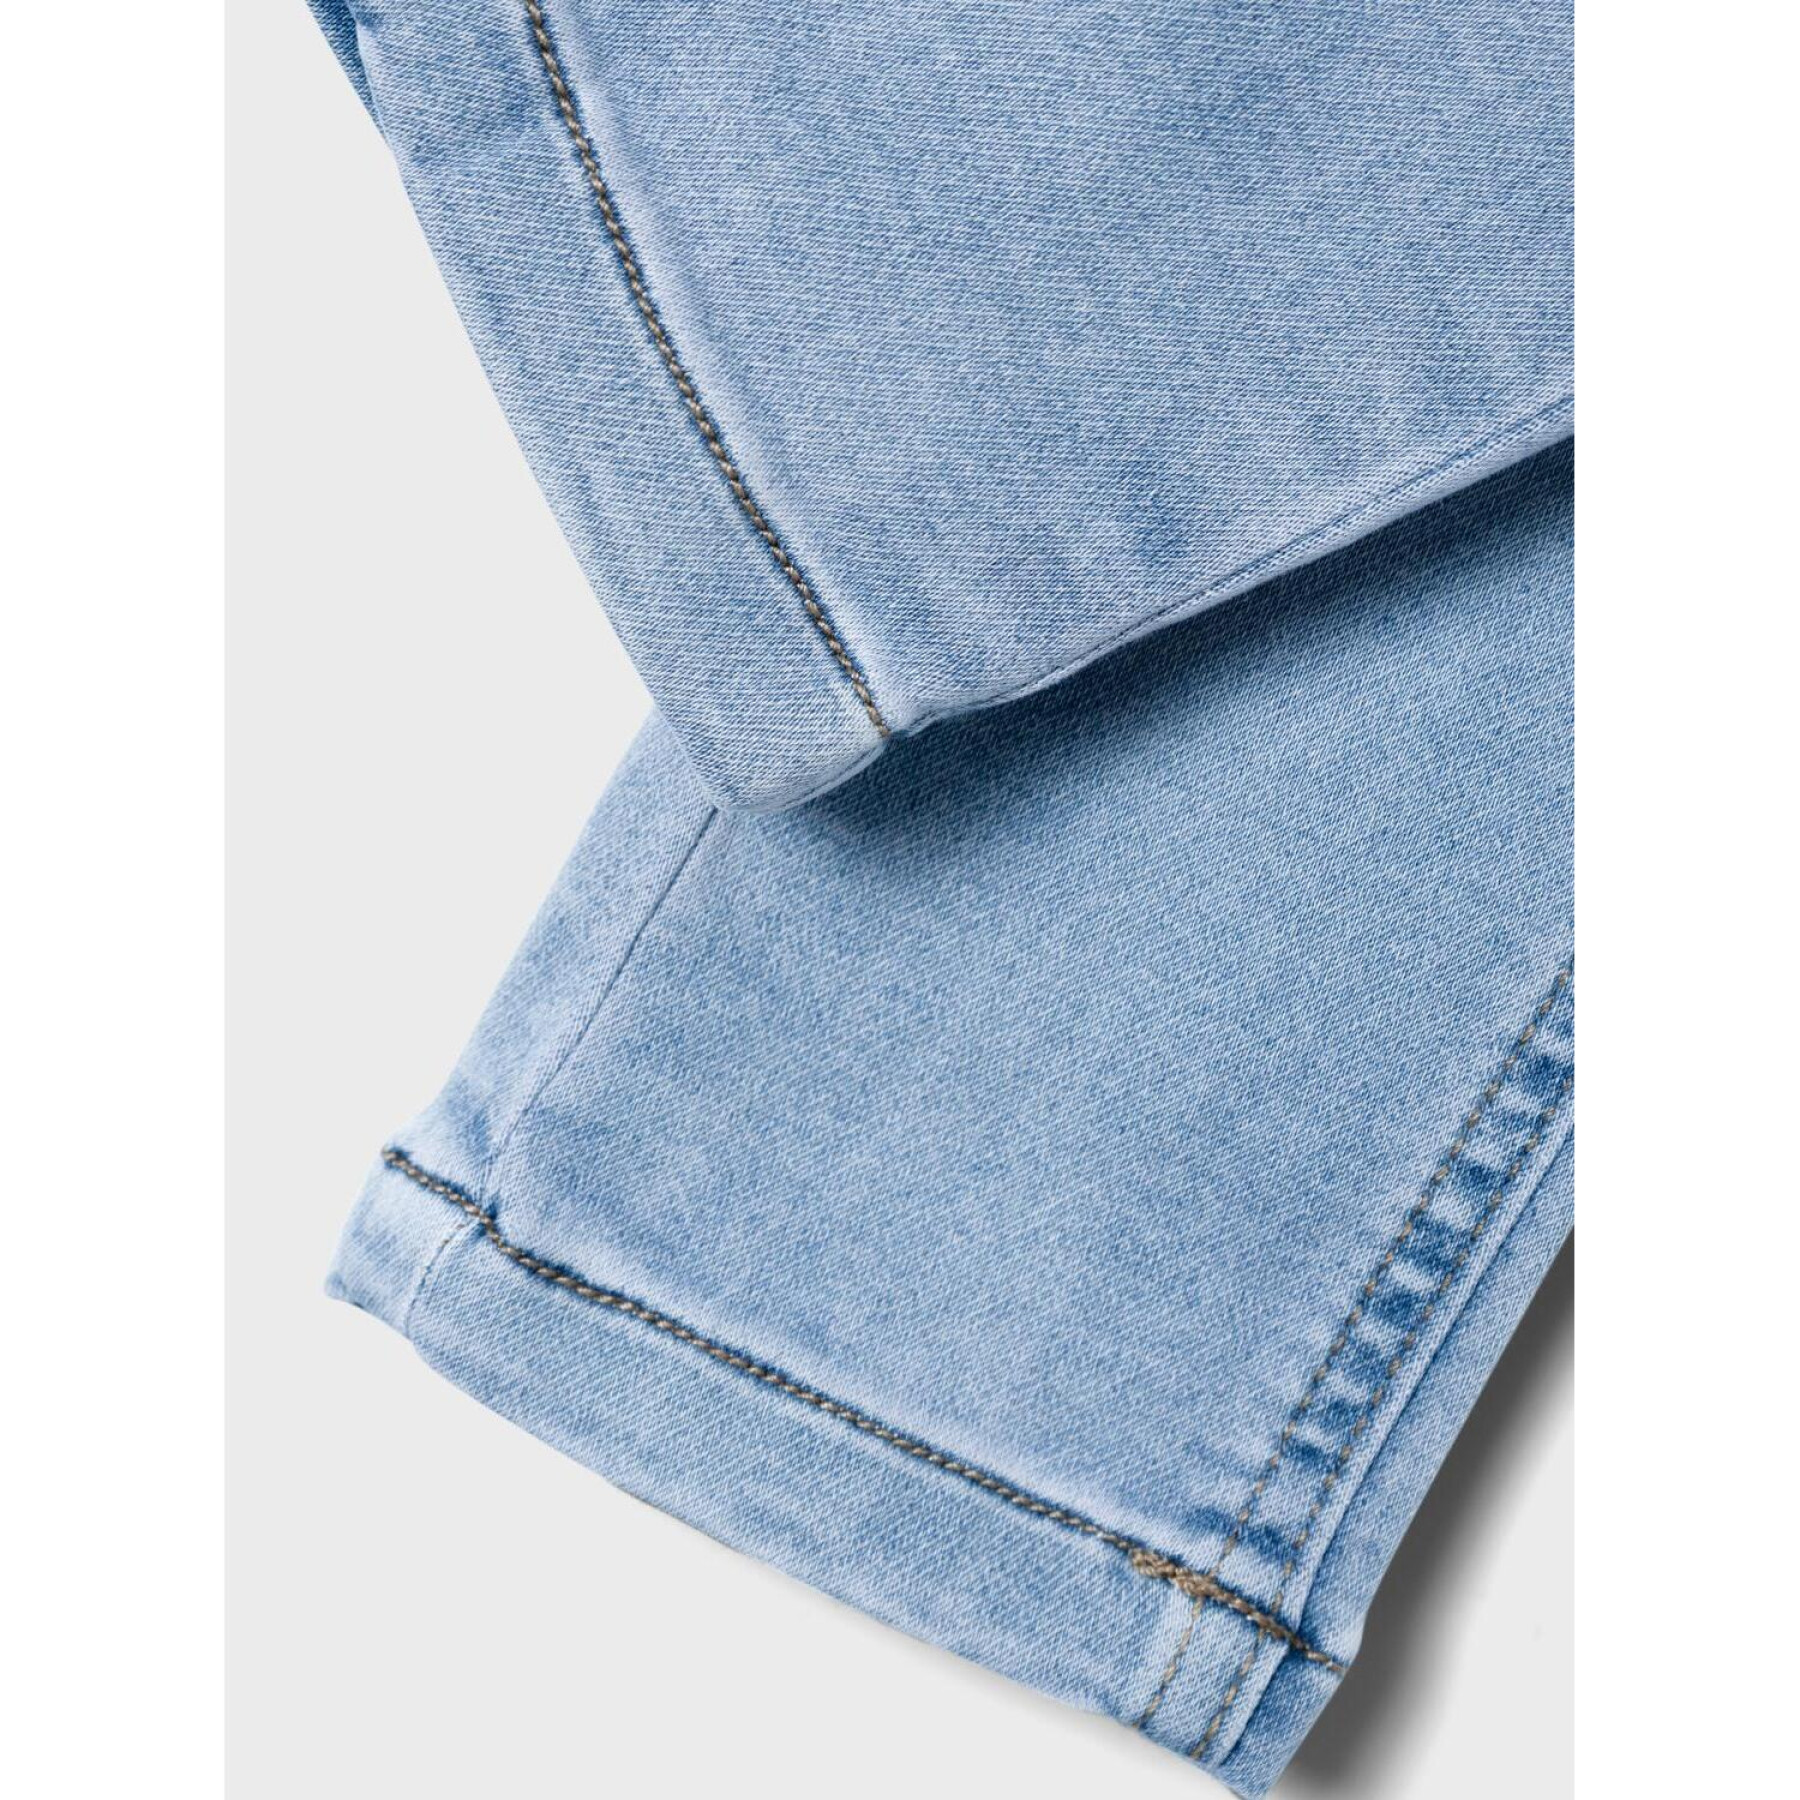 Skinny jeans voor kinderen Name it Silas 8001-TH